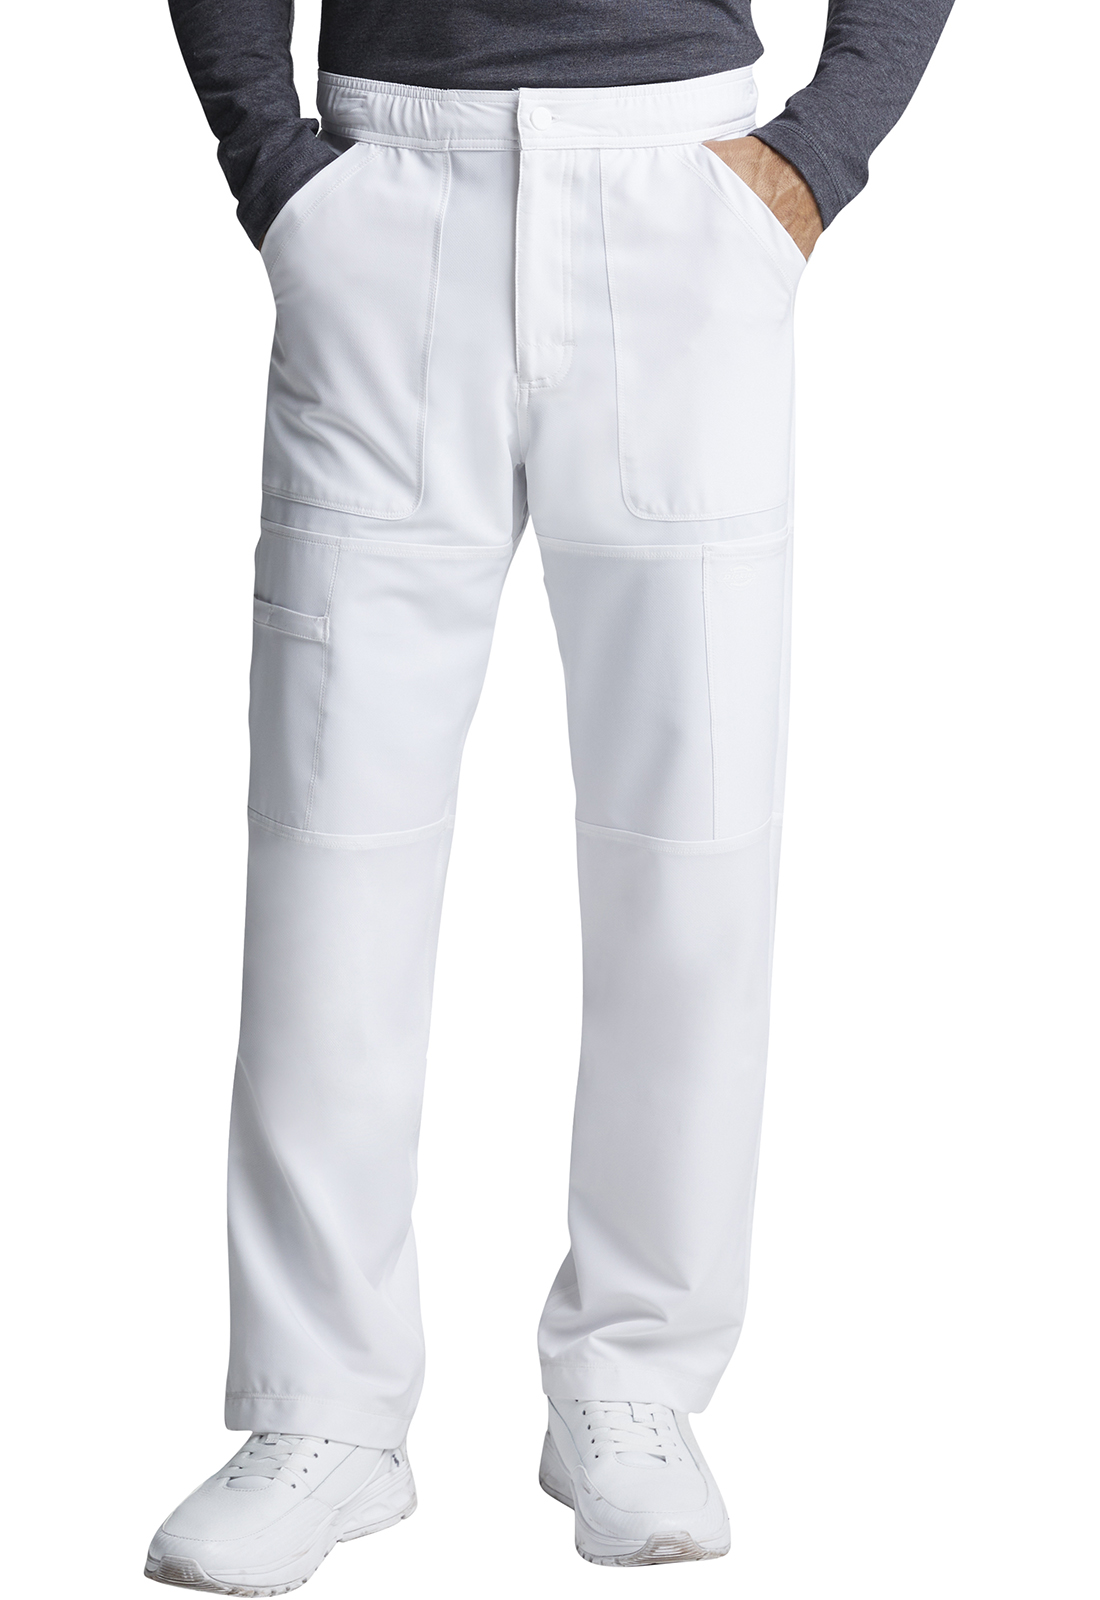 mens cargo pants white